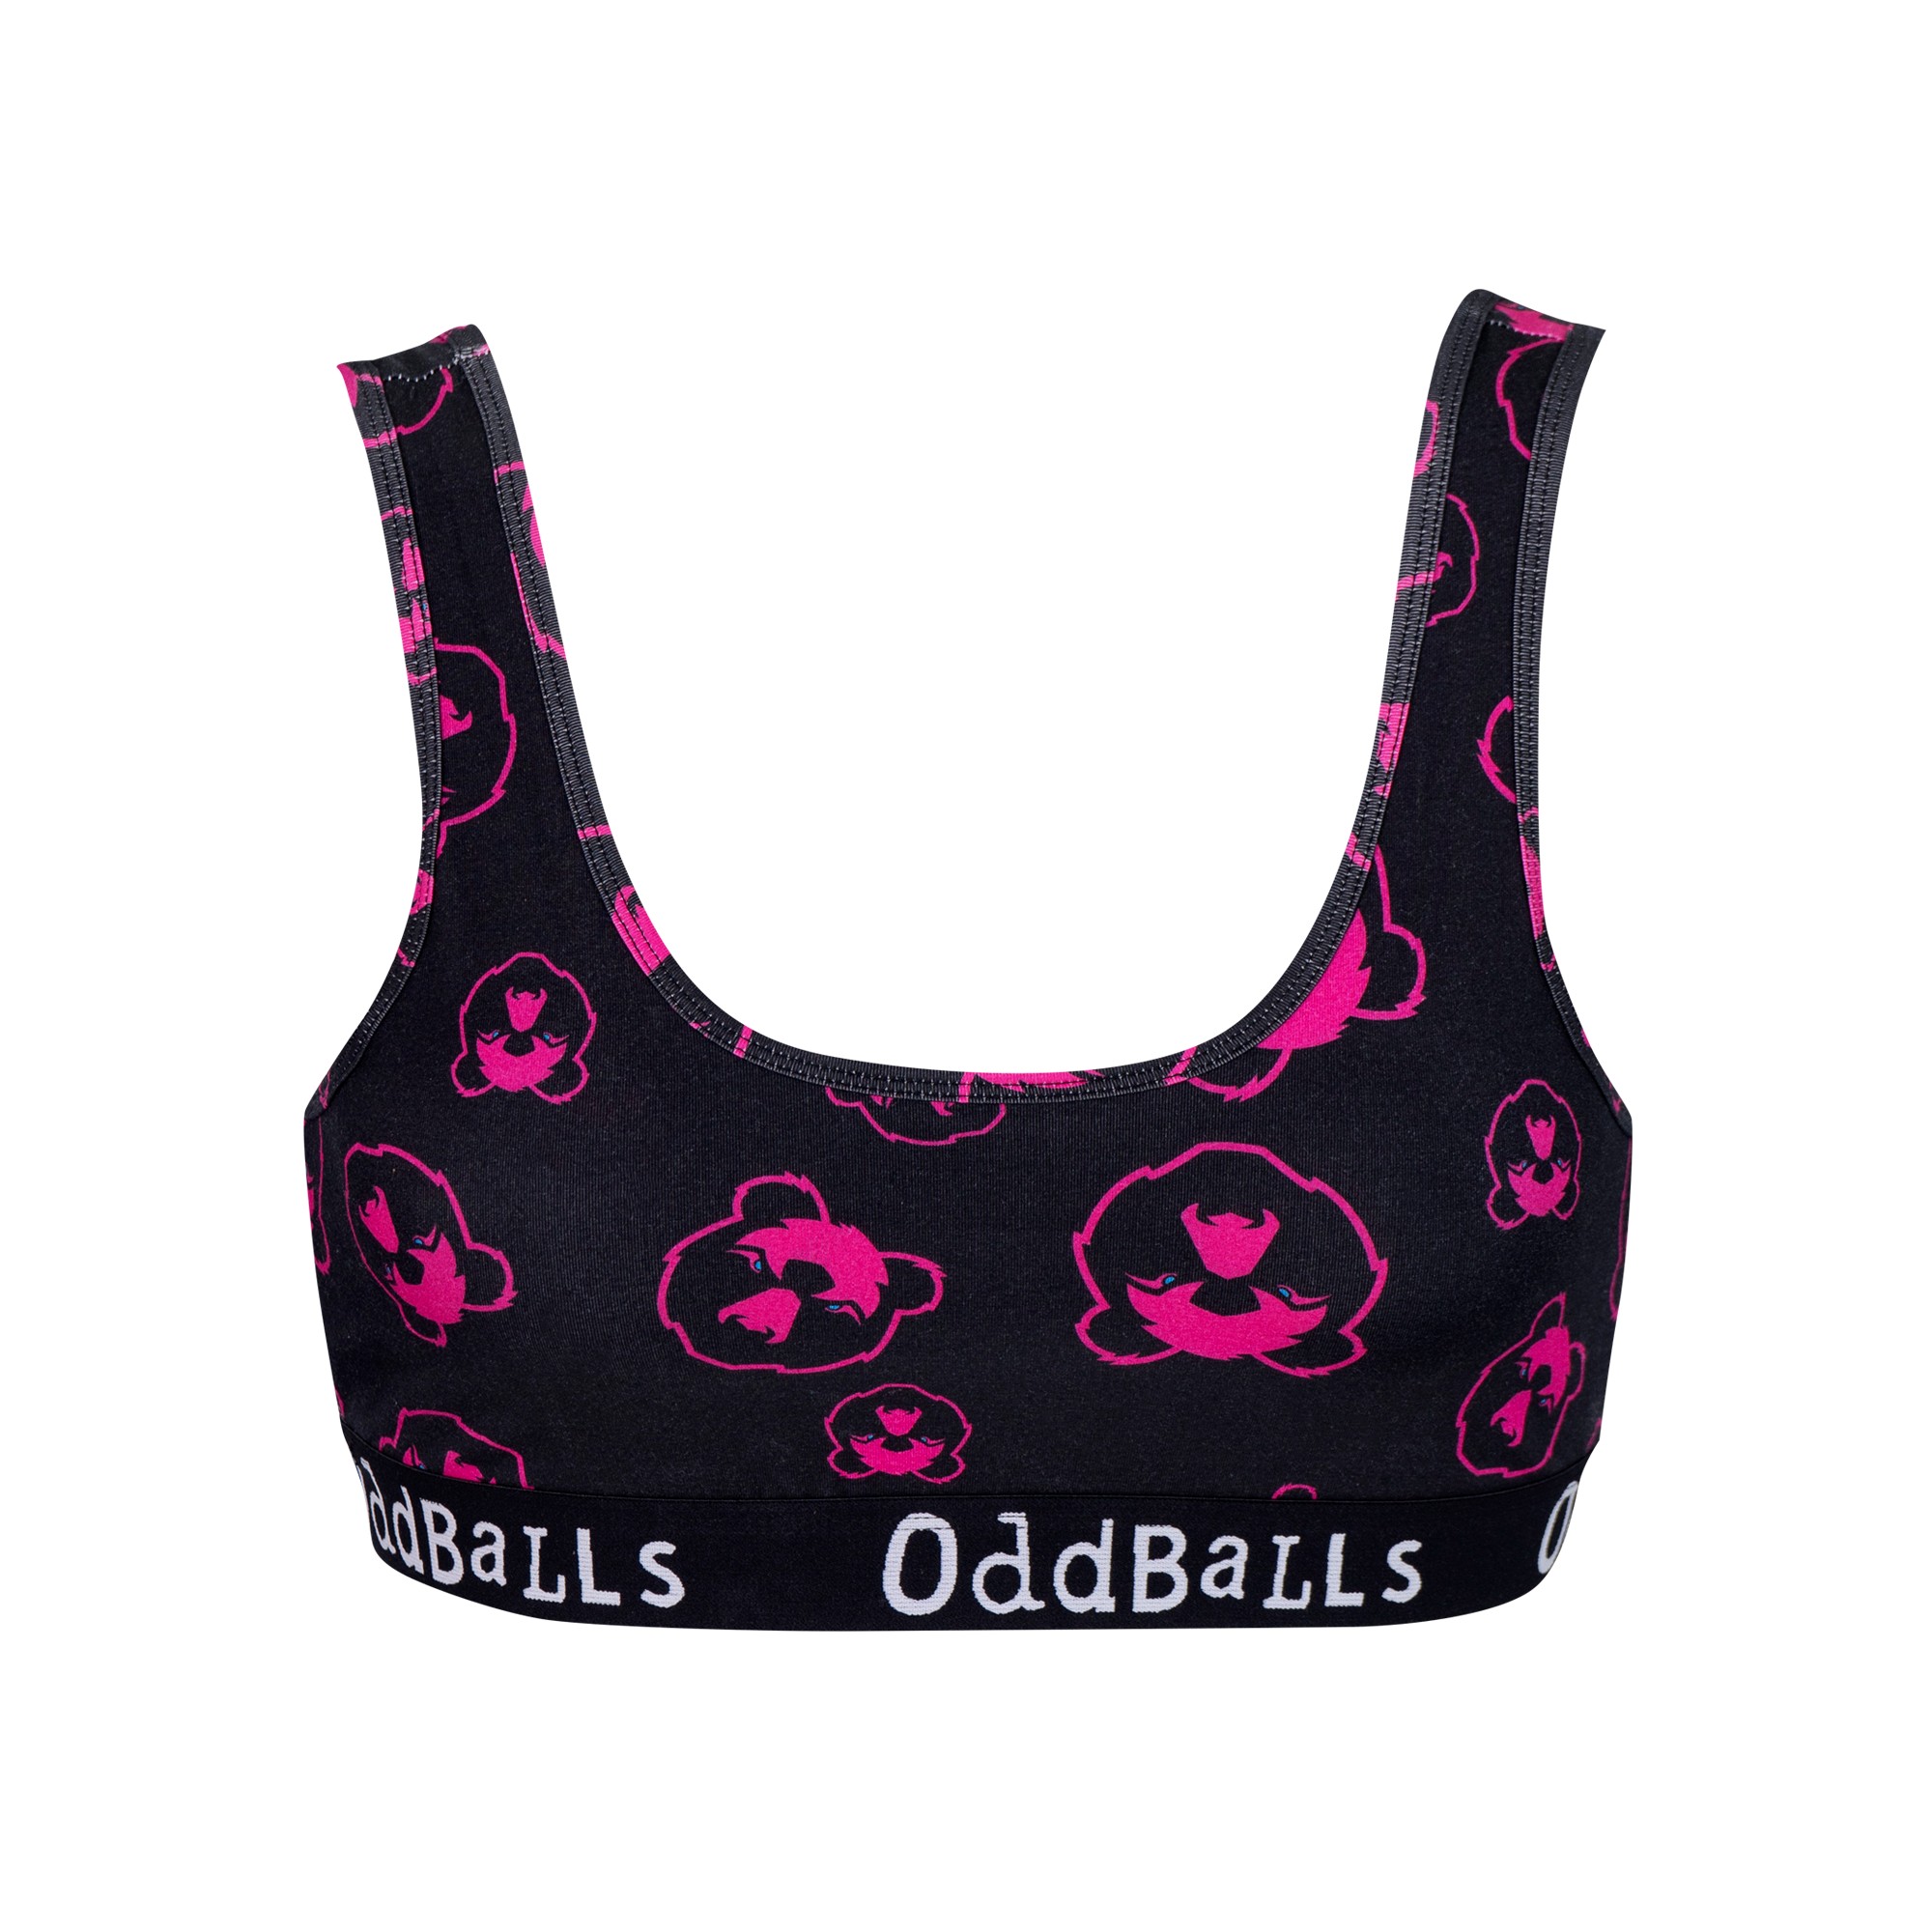 OddBalls - Ladies Bralette Subscription